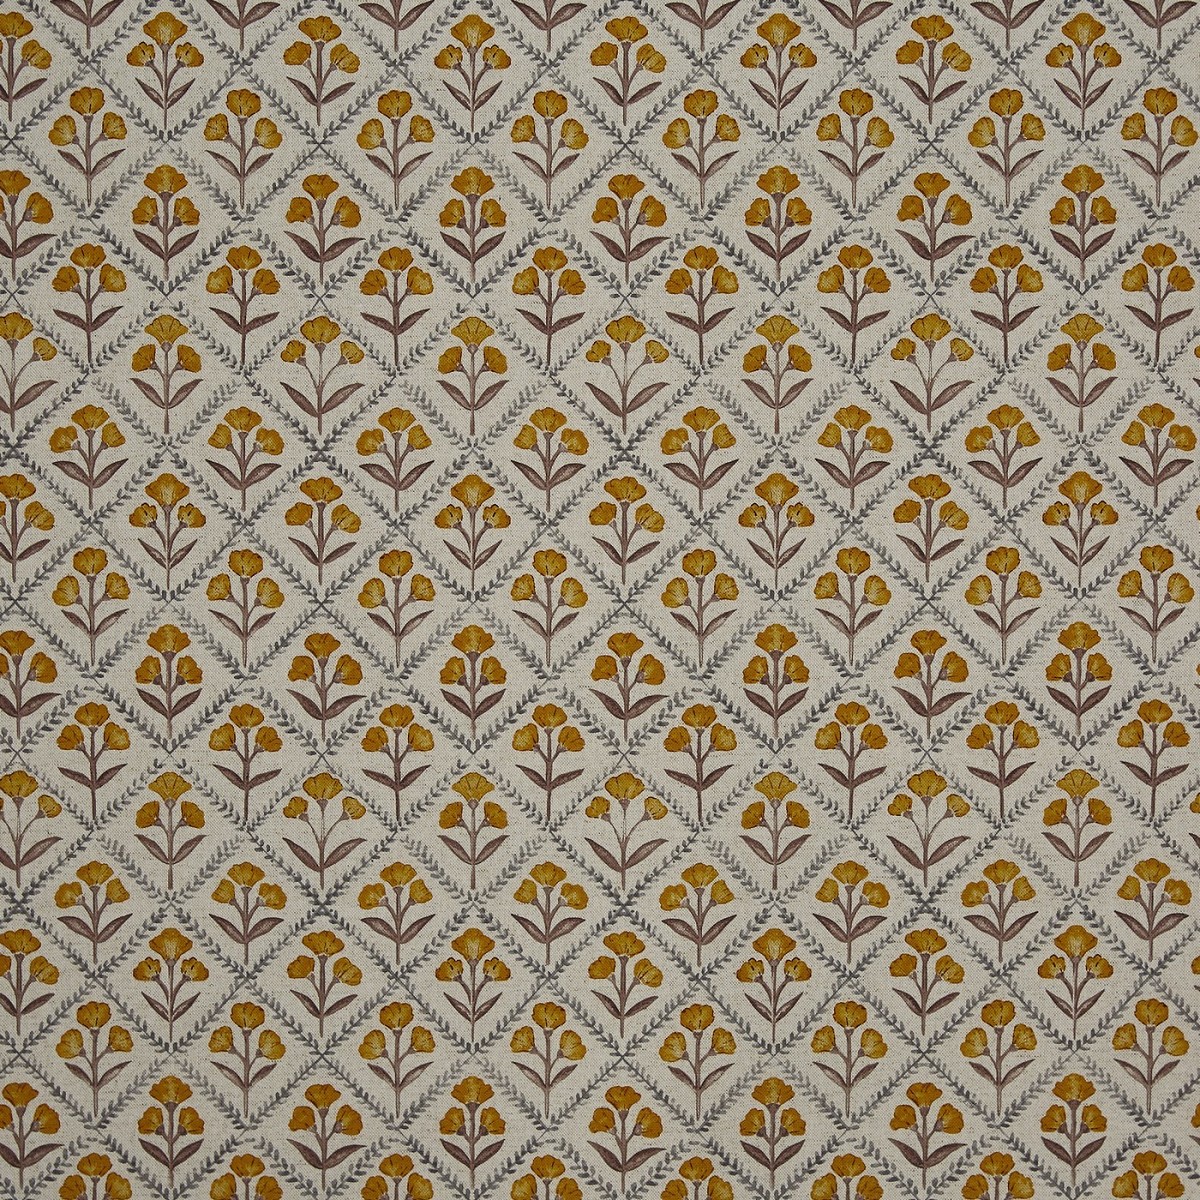 Chatsworth Honey Fabric by Prestigious Textiles